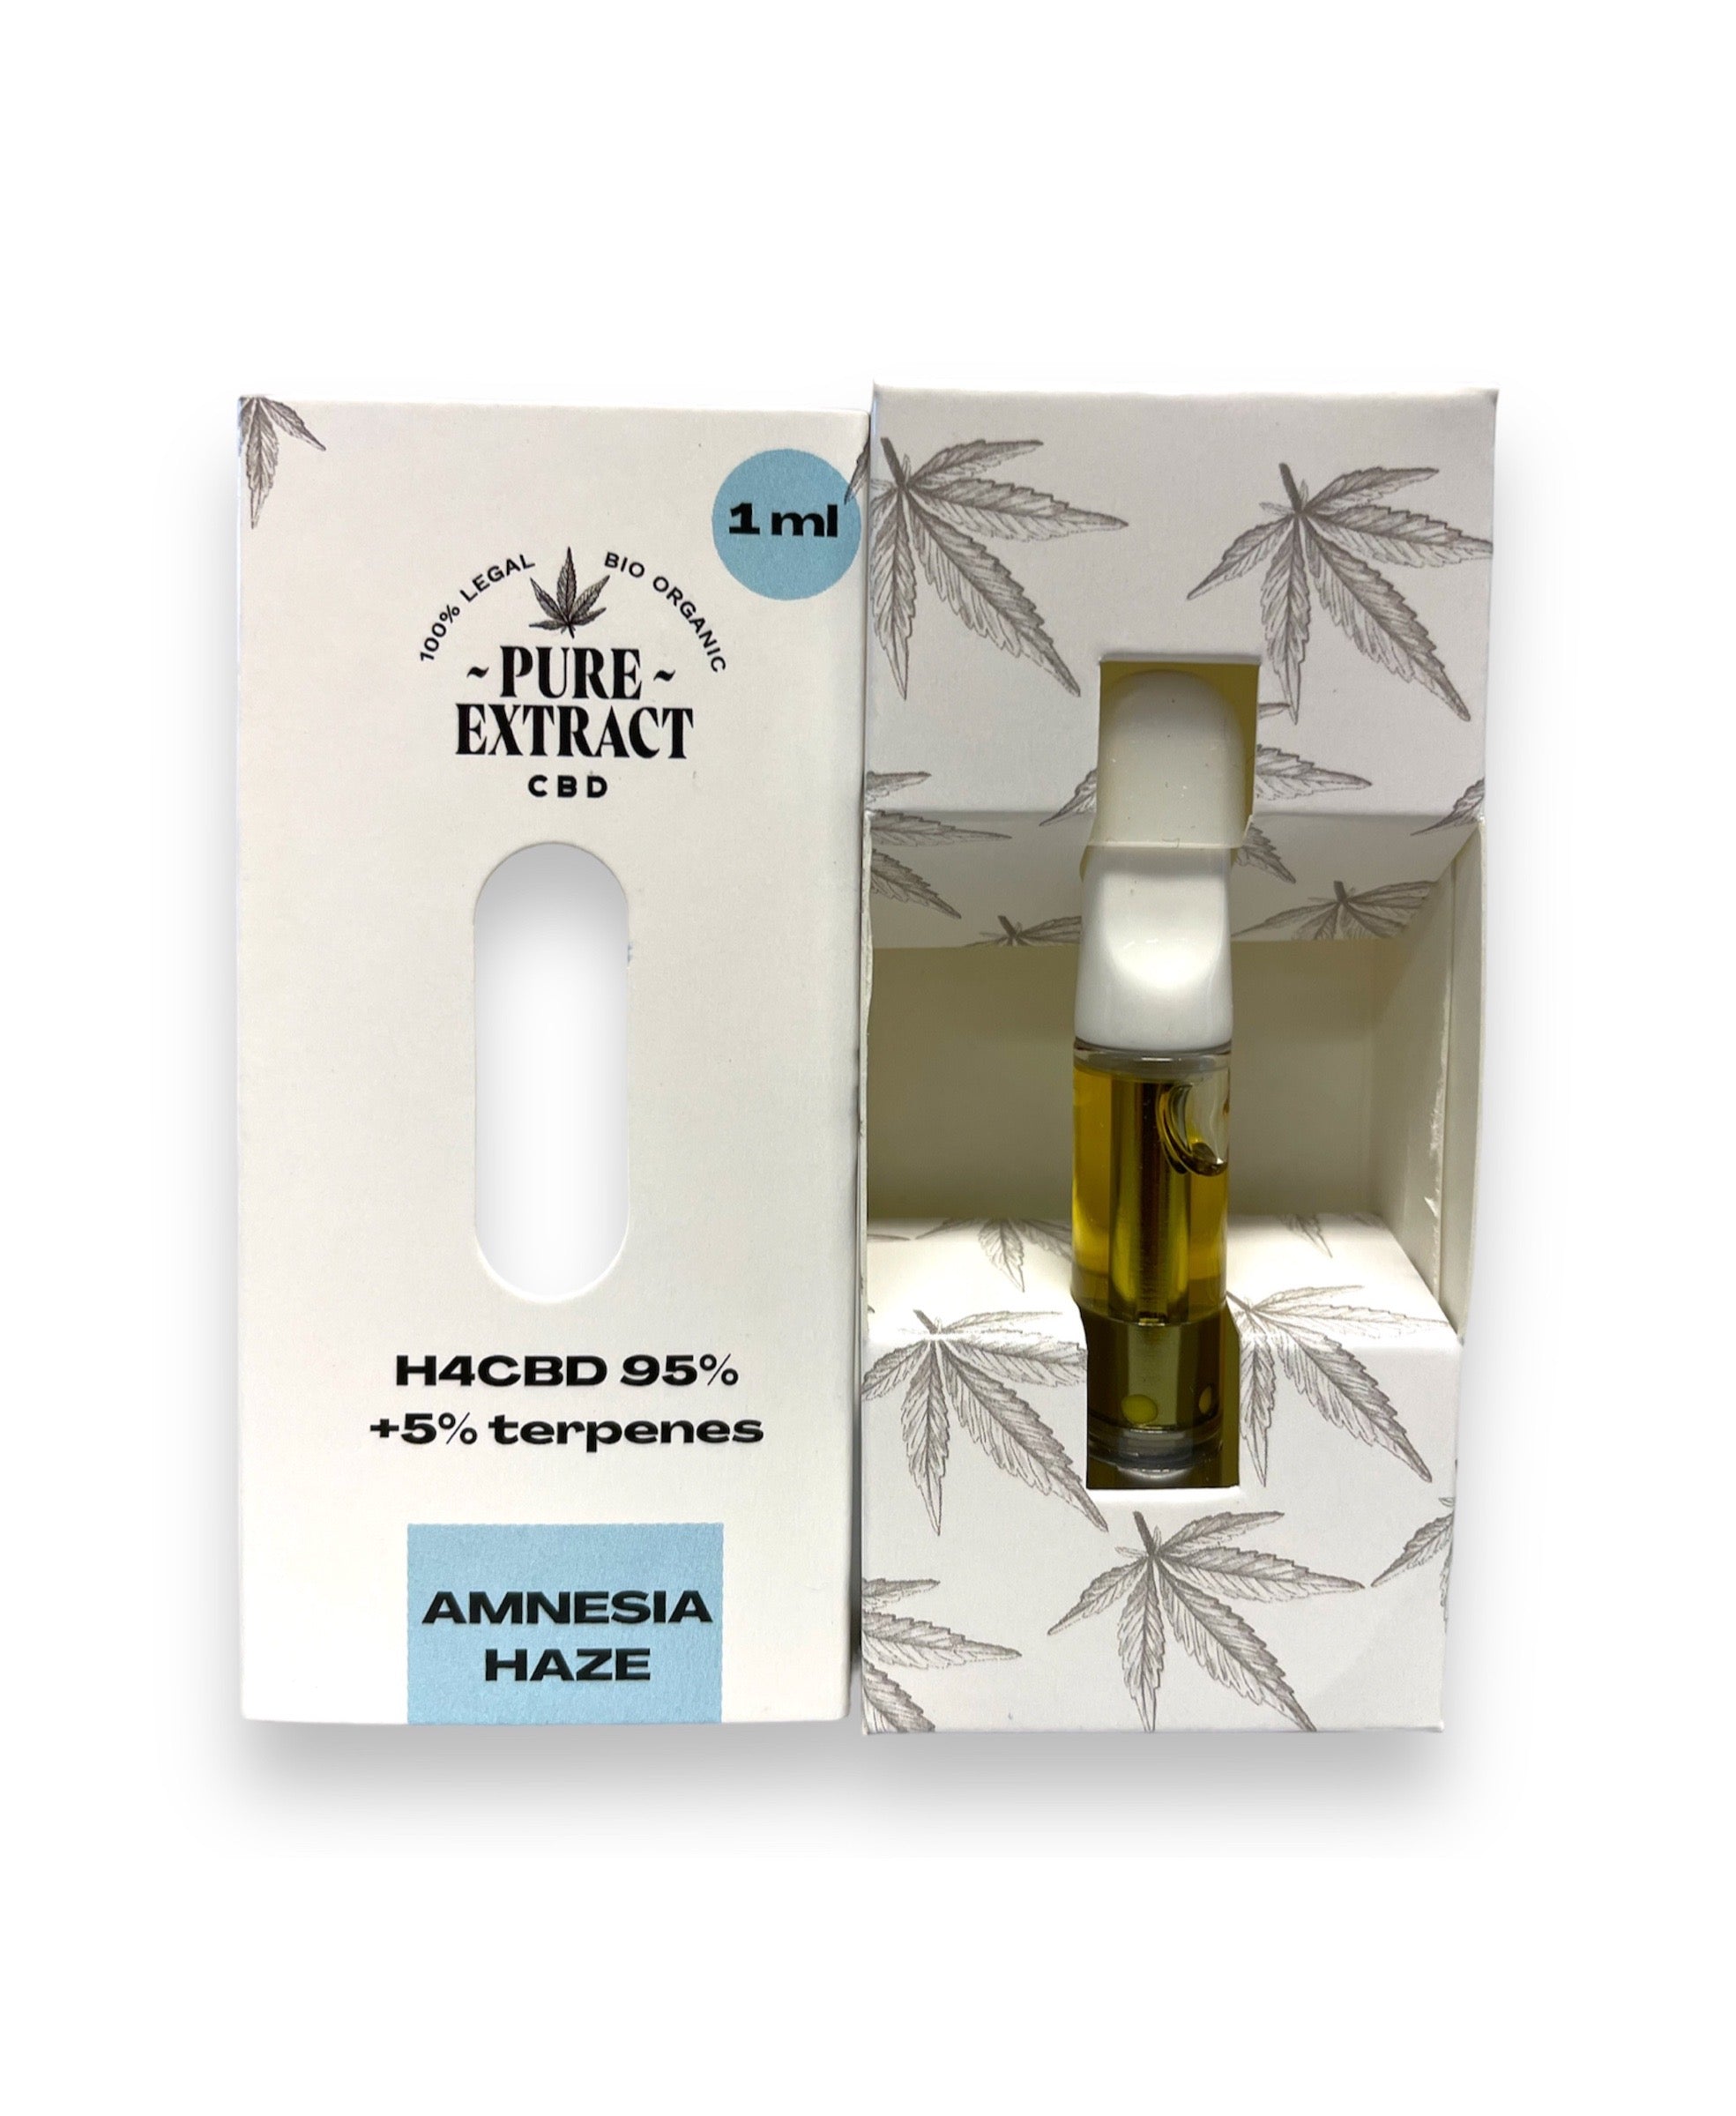 Pure Extract CBD Cartridge (Dab Pen) by H4CBD - Amnesia - 95% H4CBD - 1ML - 600 puffs